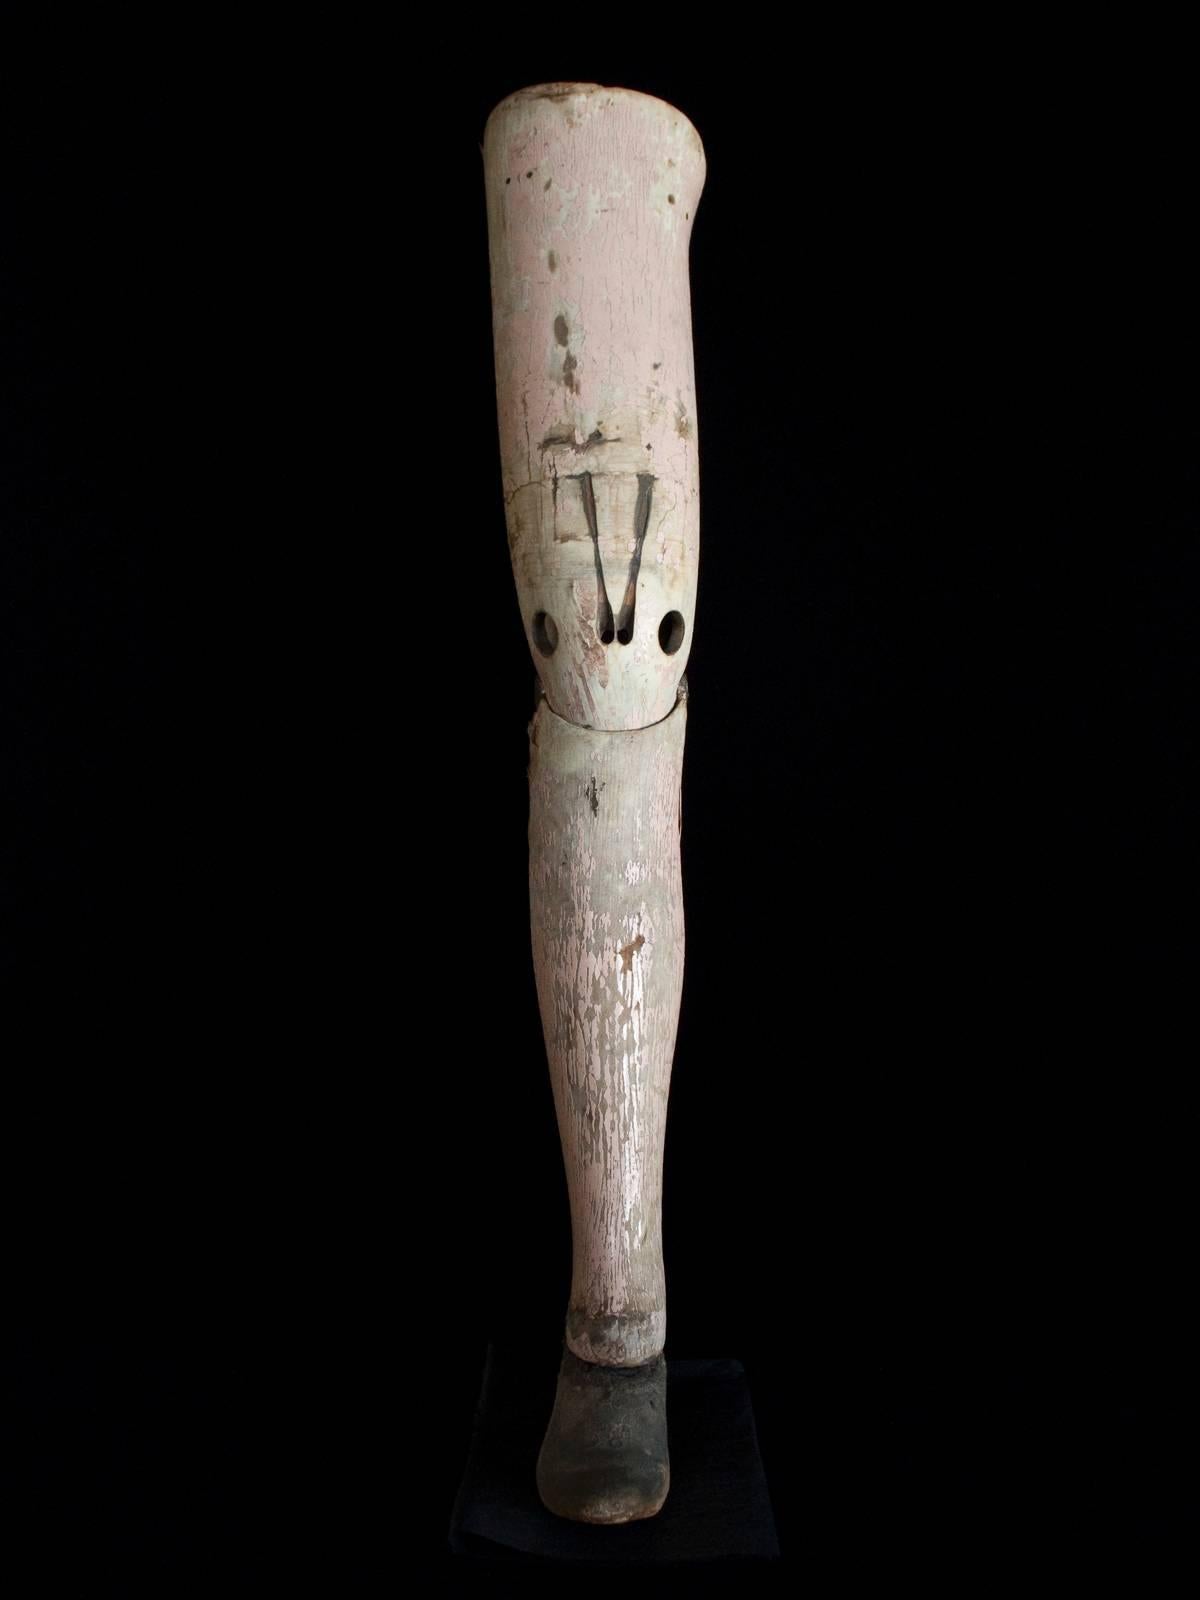 Late 19th century wood prosthetic leg
Measures: 10